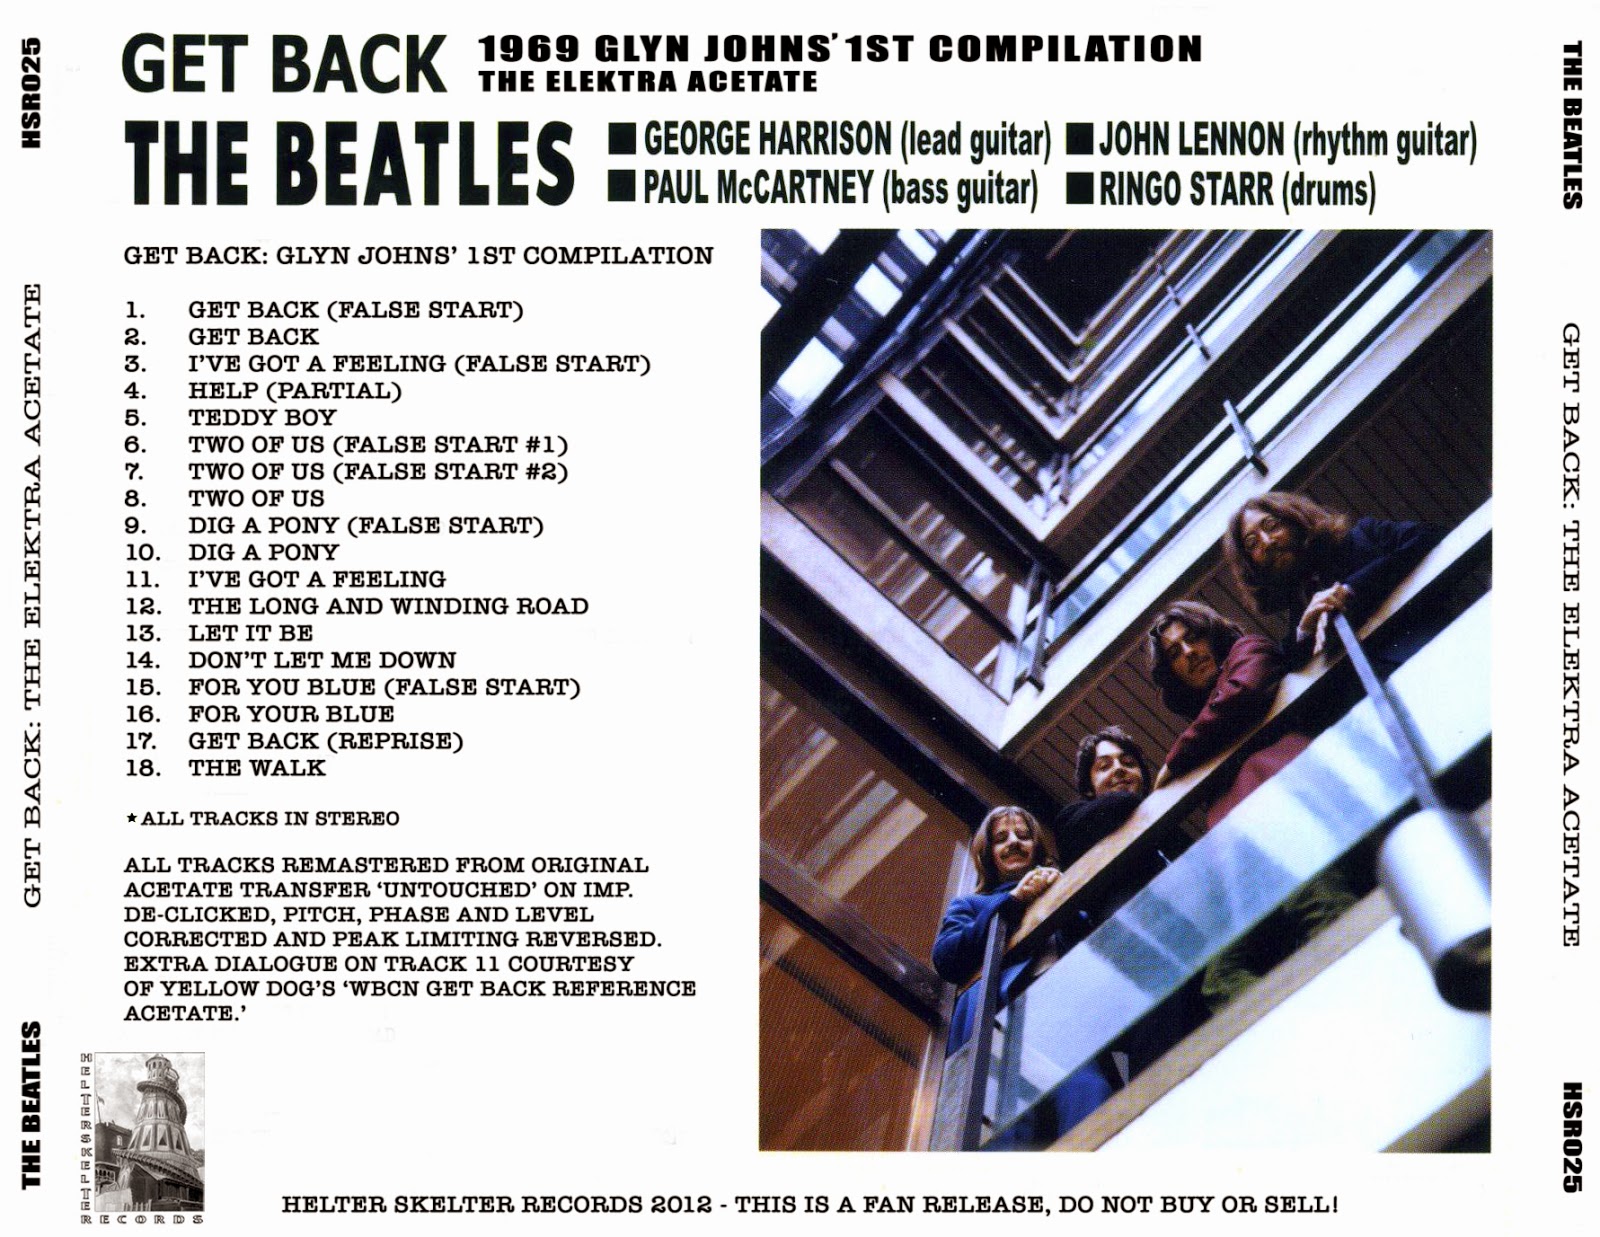 Let get backing. The Beatles get back. The Beatles: get back обложка. Обложки альбомов the Beatles -get back. The Beatles get back обложка DVD.